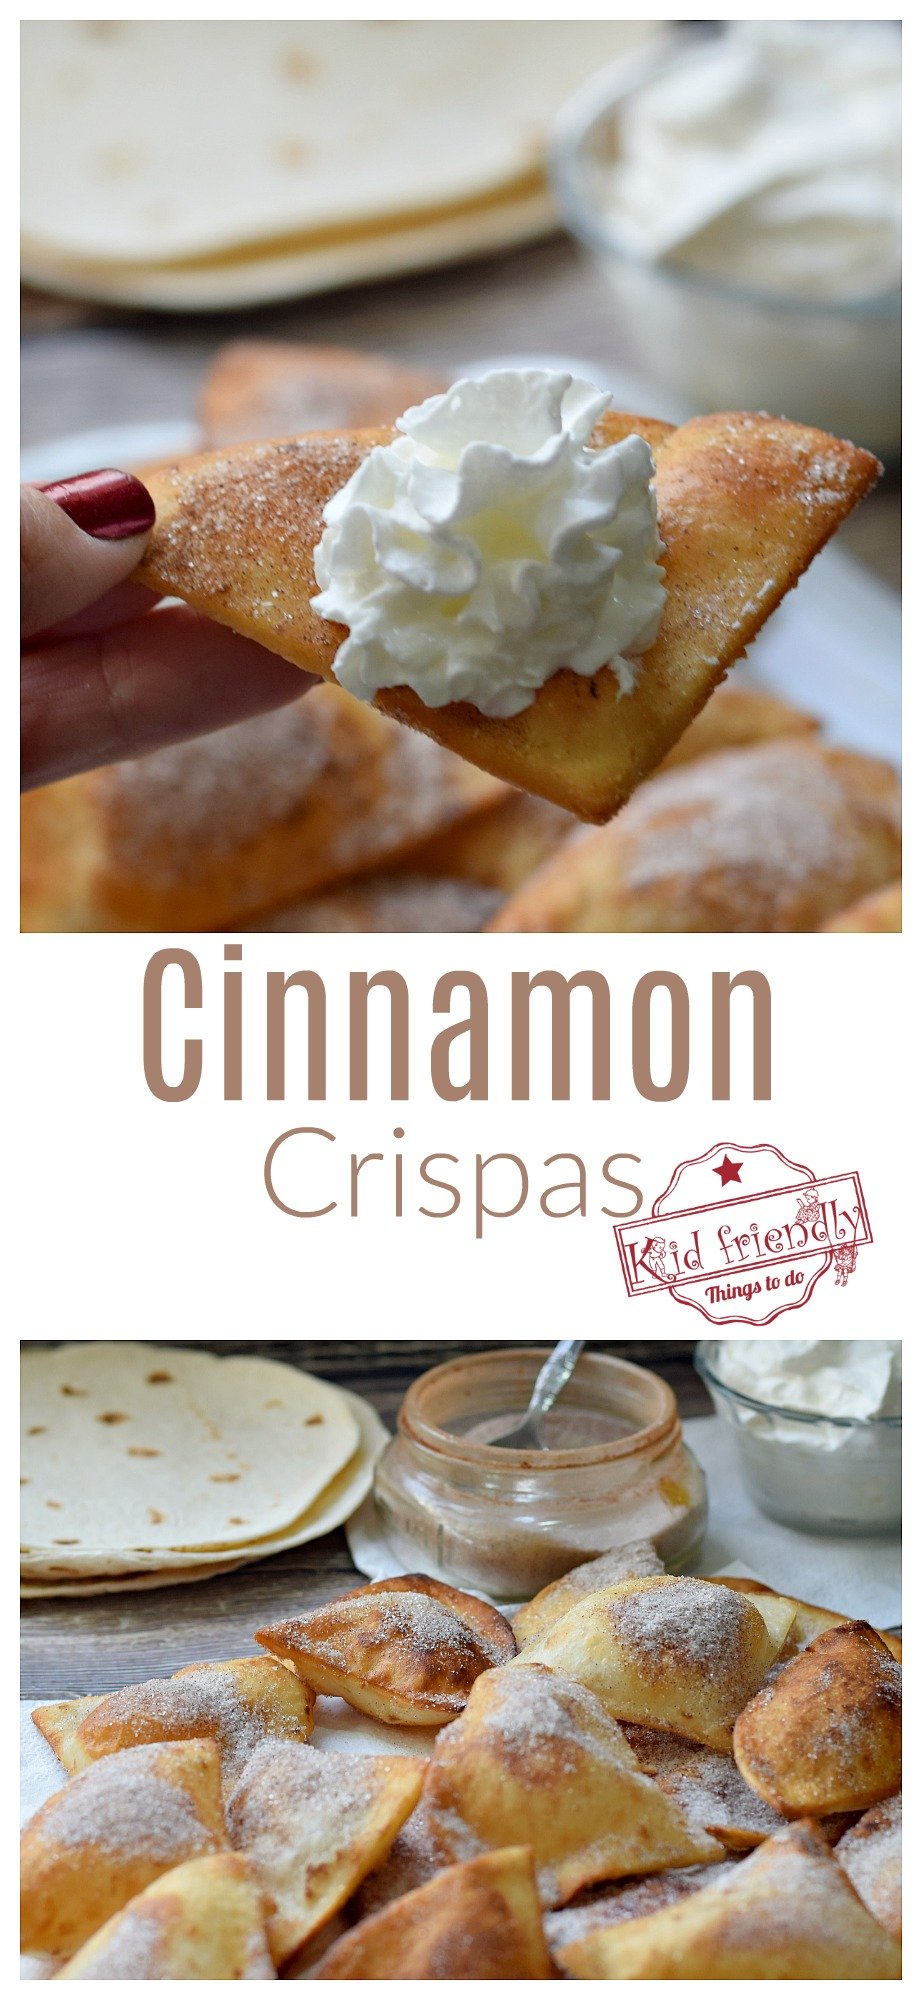 Cinnamon Crispas Dessert Recipe - cinnamon sugar tortillas - perfect for an easy summer night, perfect dessert for a Mexican meal or holiday recipe - www.kidfriendlythingstodo.com